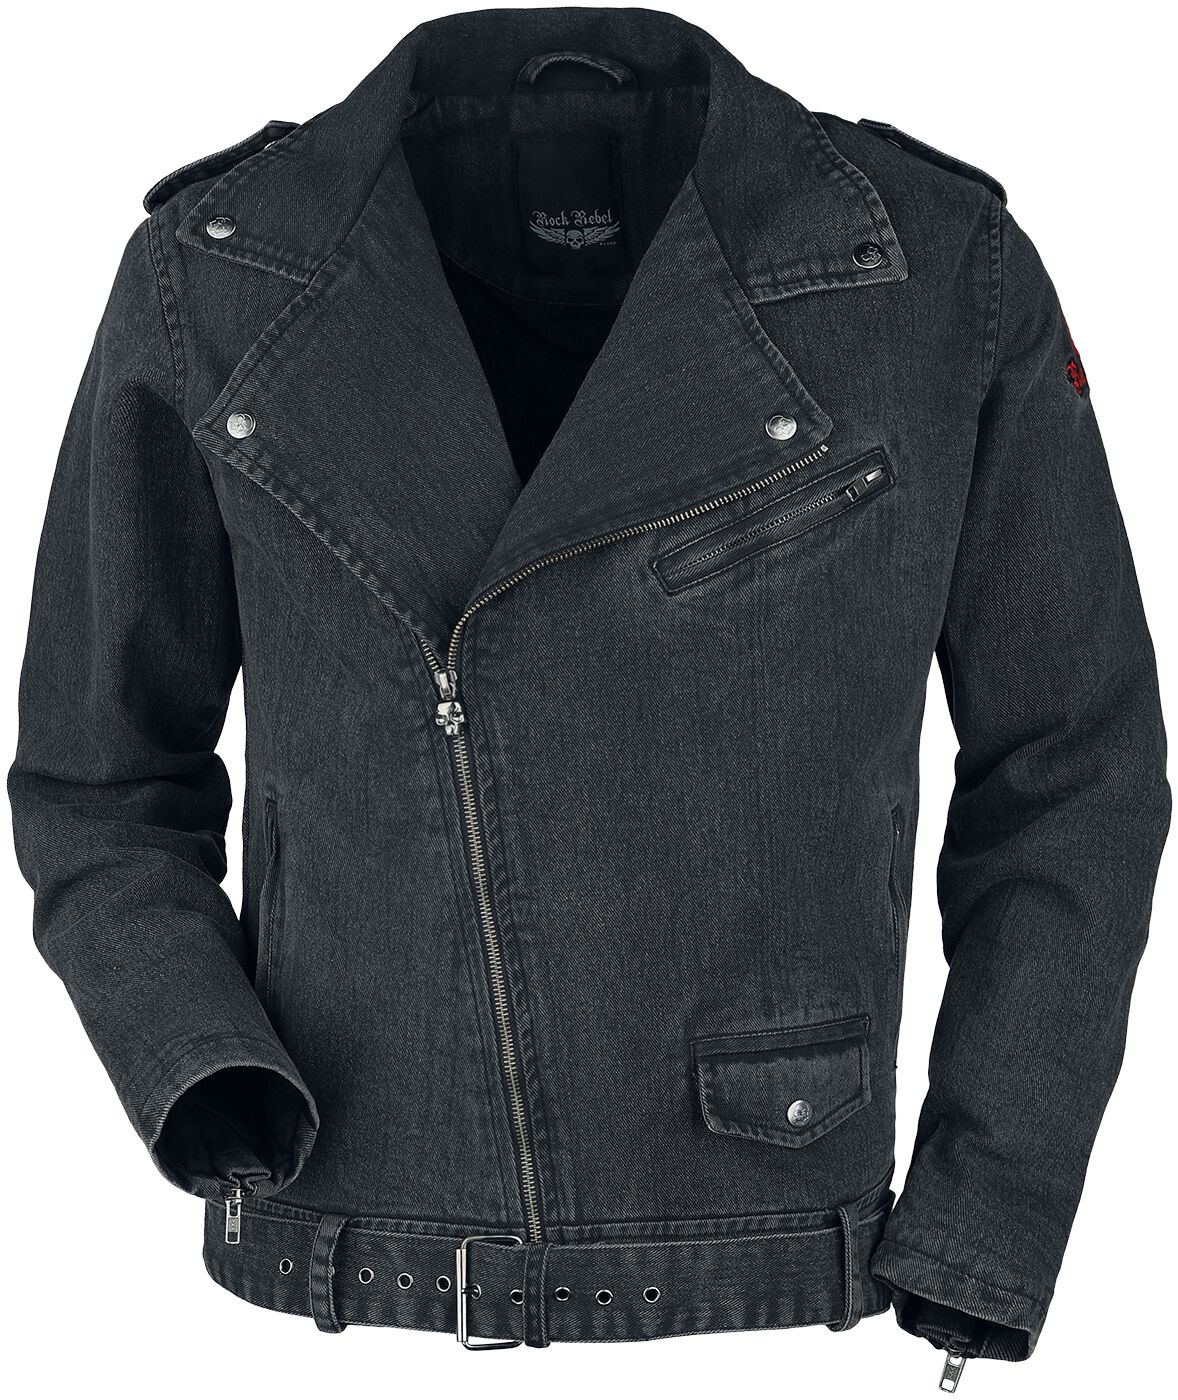 Rock Rebel by EMP - Rock Jeansjacke - Biker Style Jeans Jacket - S bis XXL - für Männer - Größe S - grau